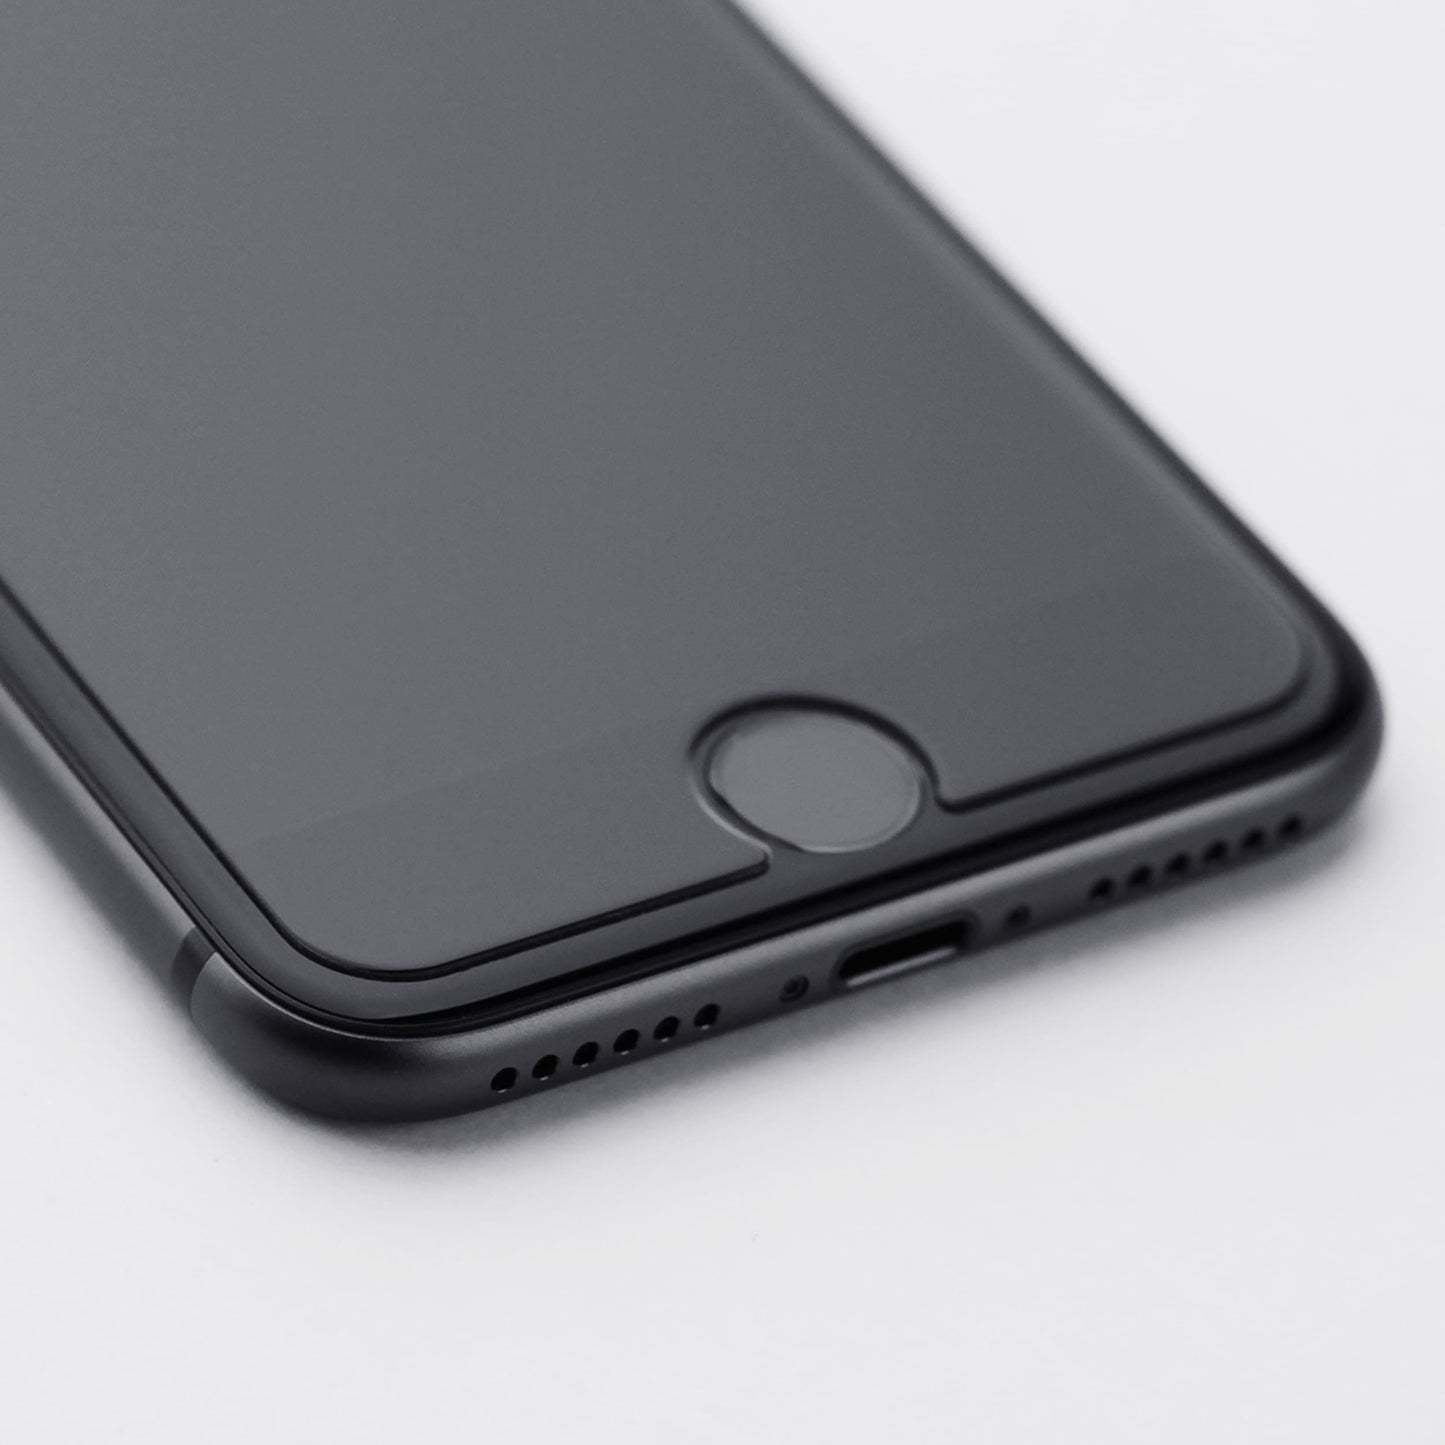 iPhone 8 Plus - sapphire glass